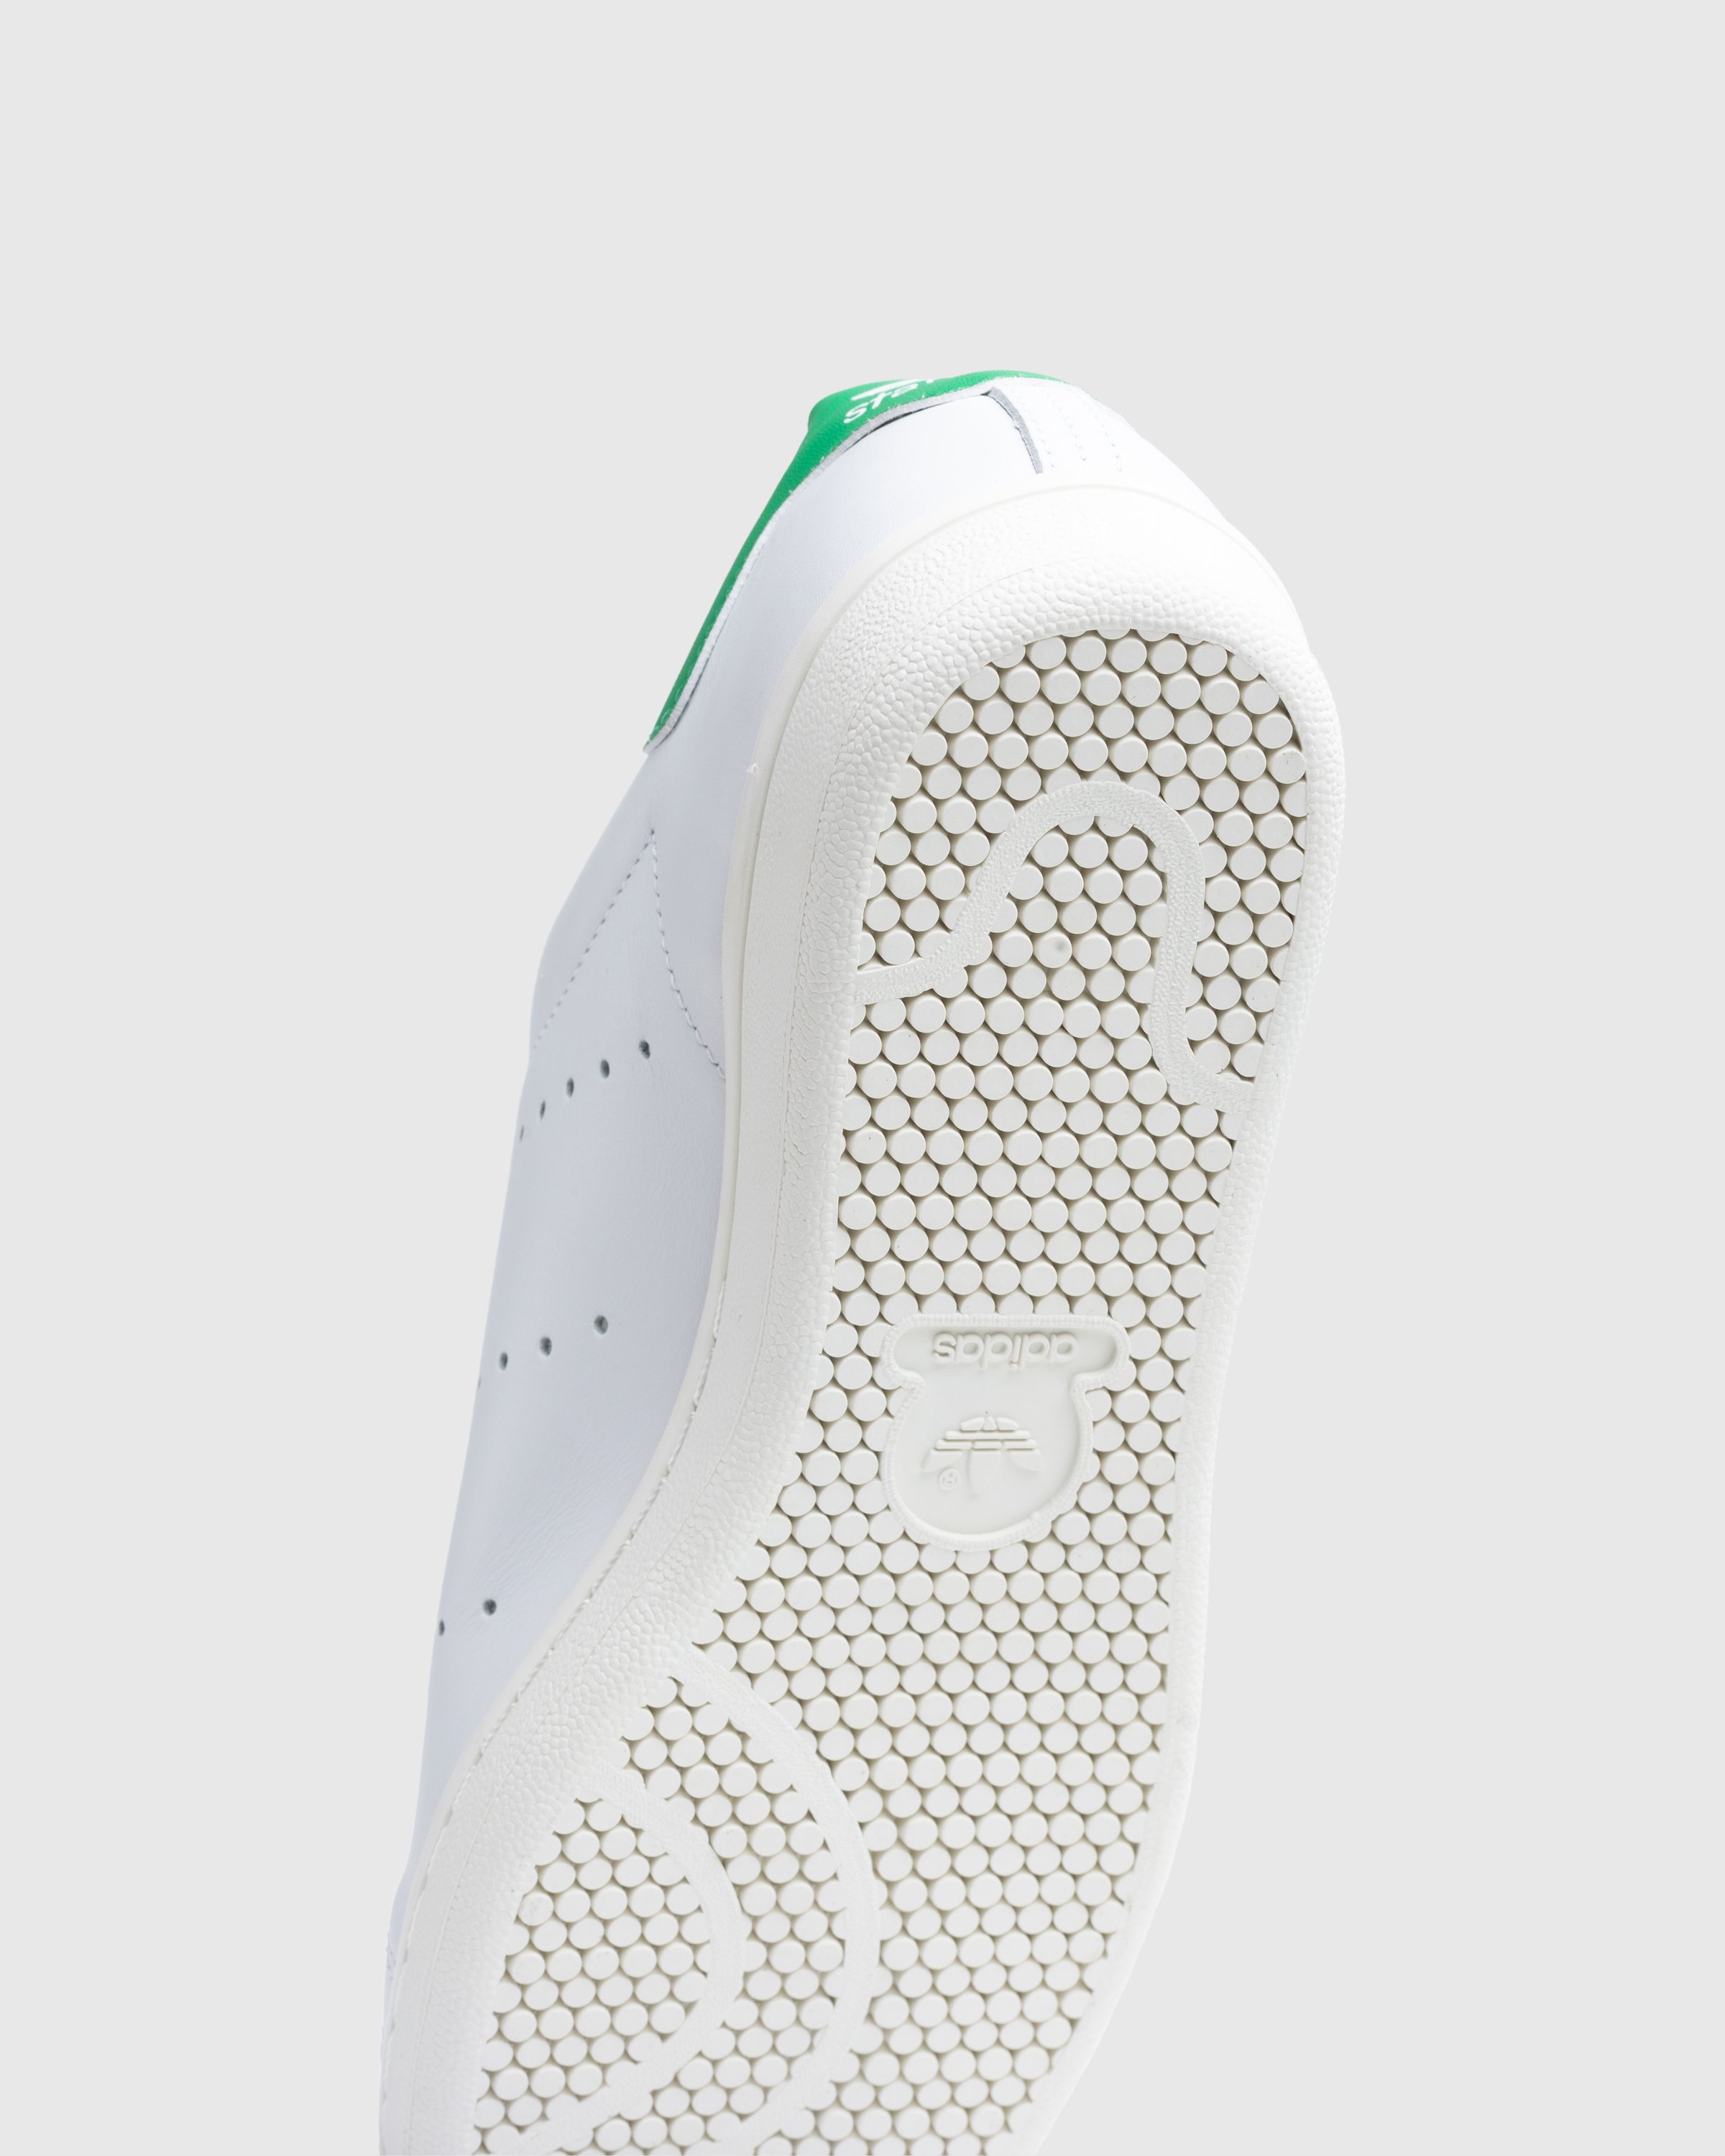 Adidas - Stan Smith 80s - Footwear - White - Image 6